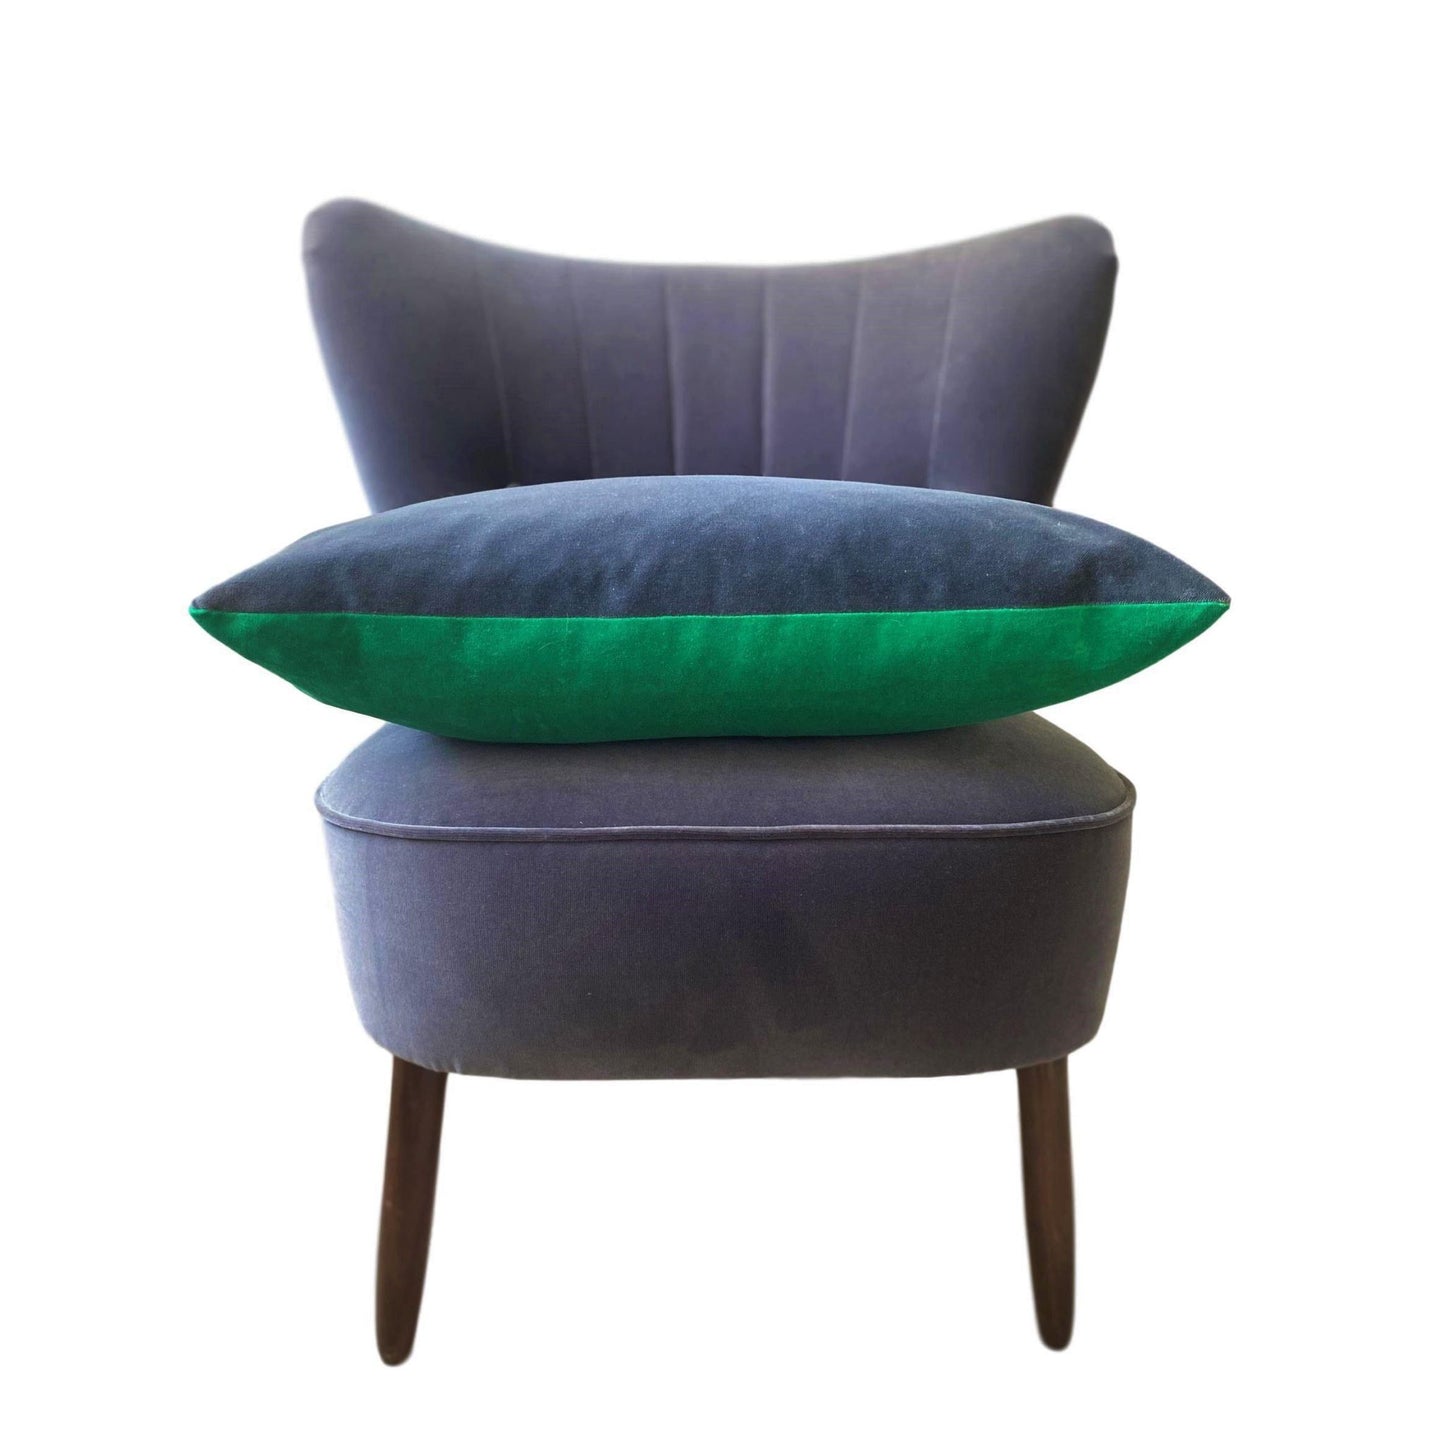 Dark Grey Velvet Cushion Cover with Emerald Green